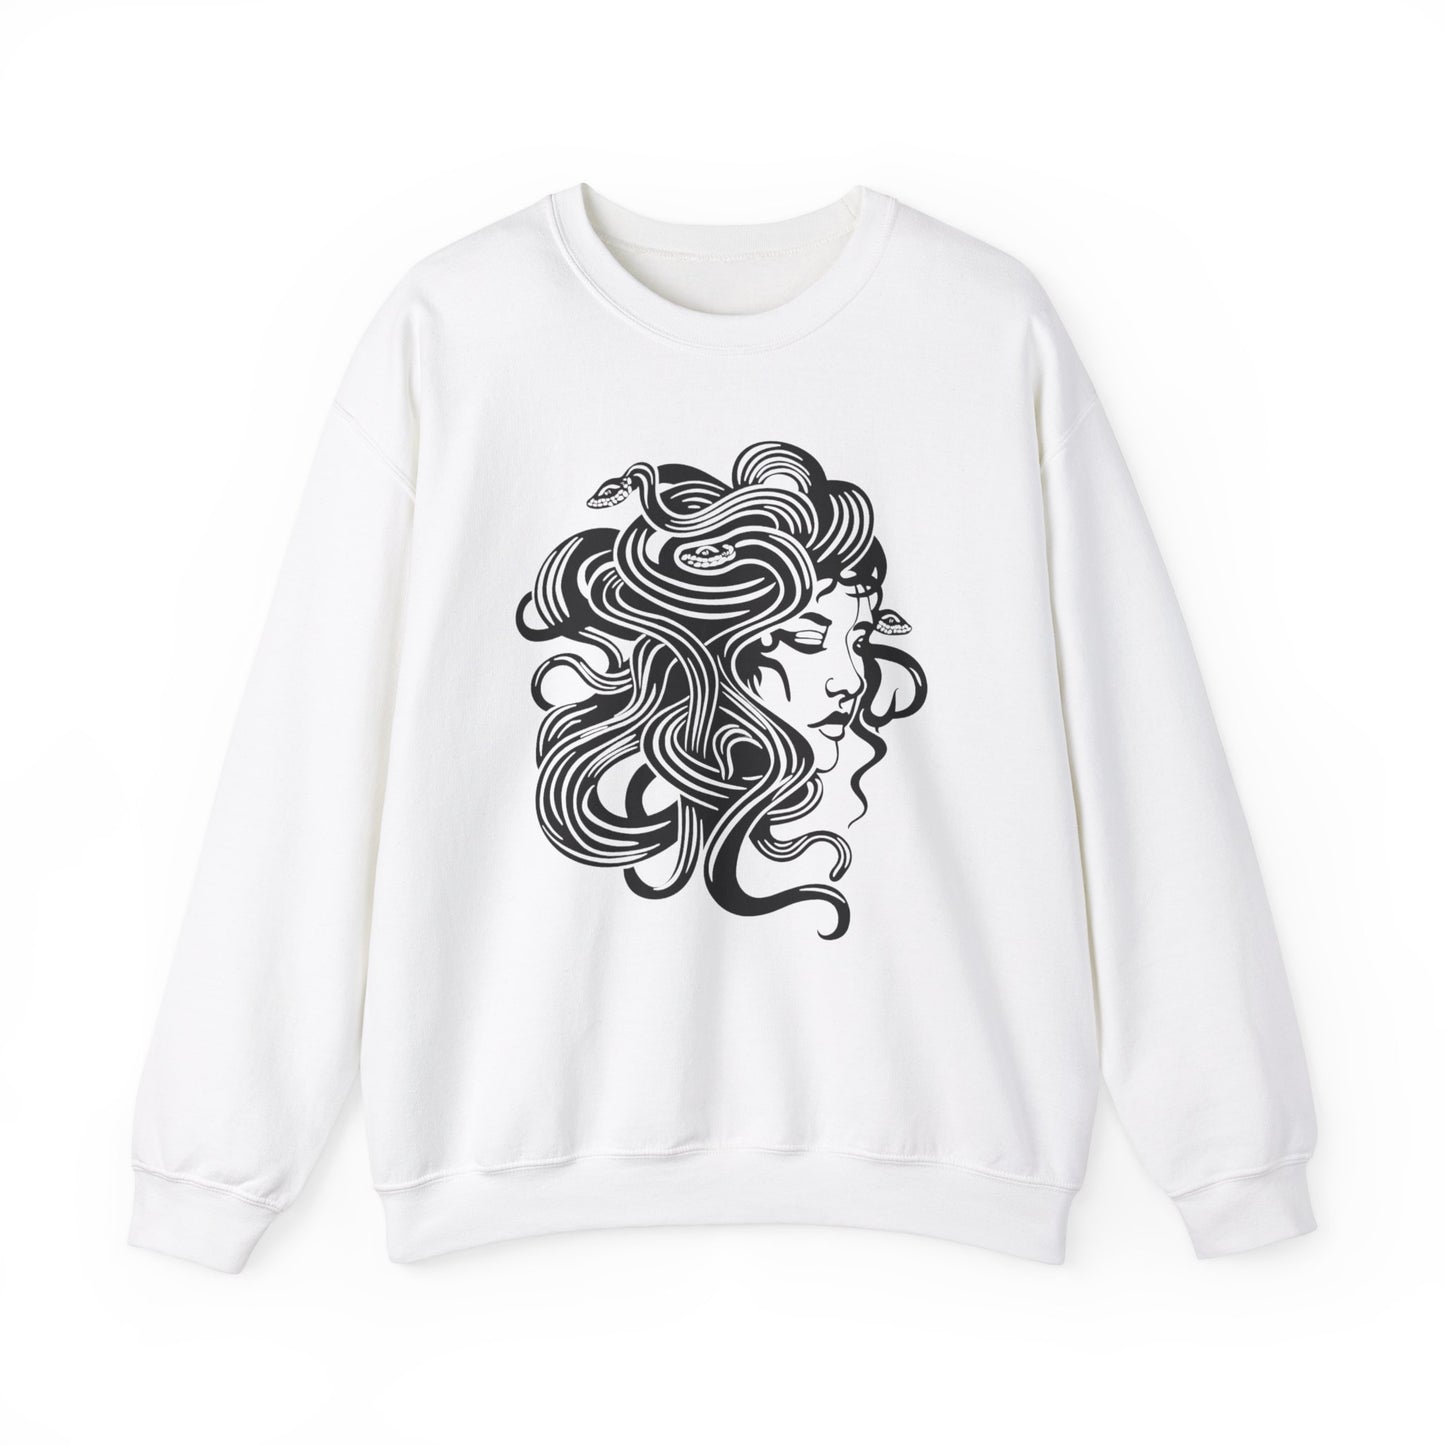 Medusa Women's Crewneck Sweatshirt - Minimalistic Print, AI Made Cool Artsy Design, Dark Style Edgy, Long Sleeve Medusa Snake Design